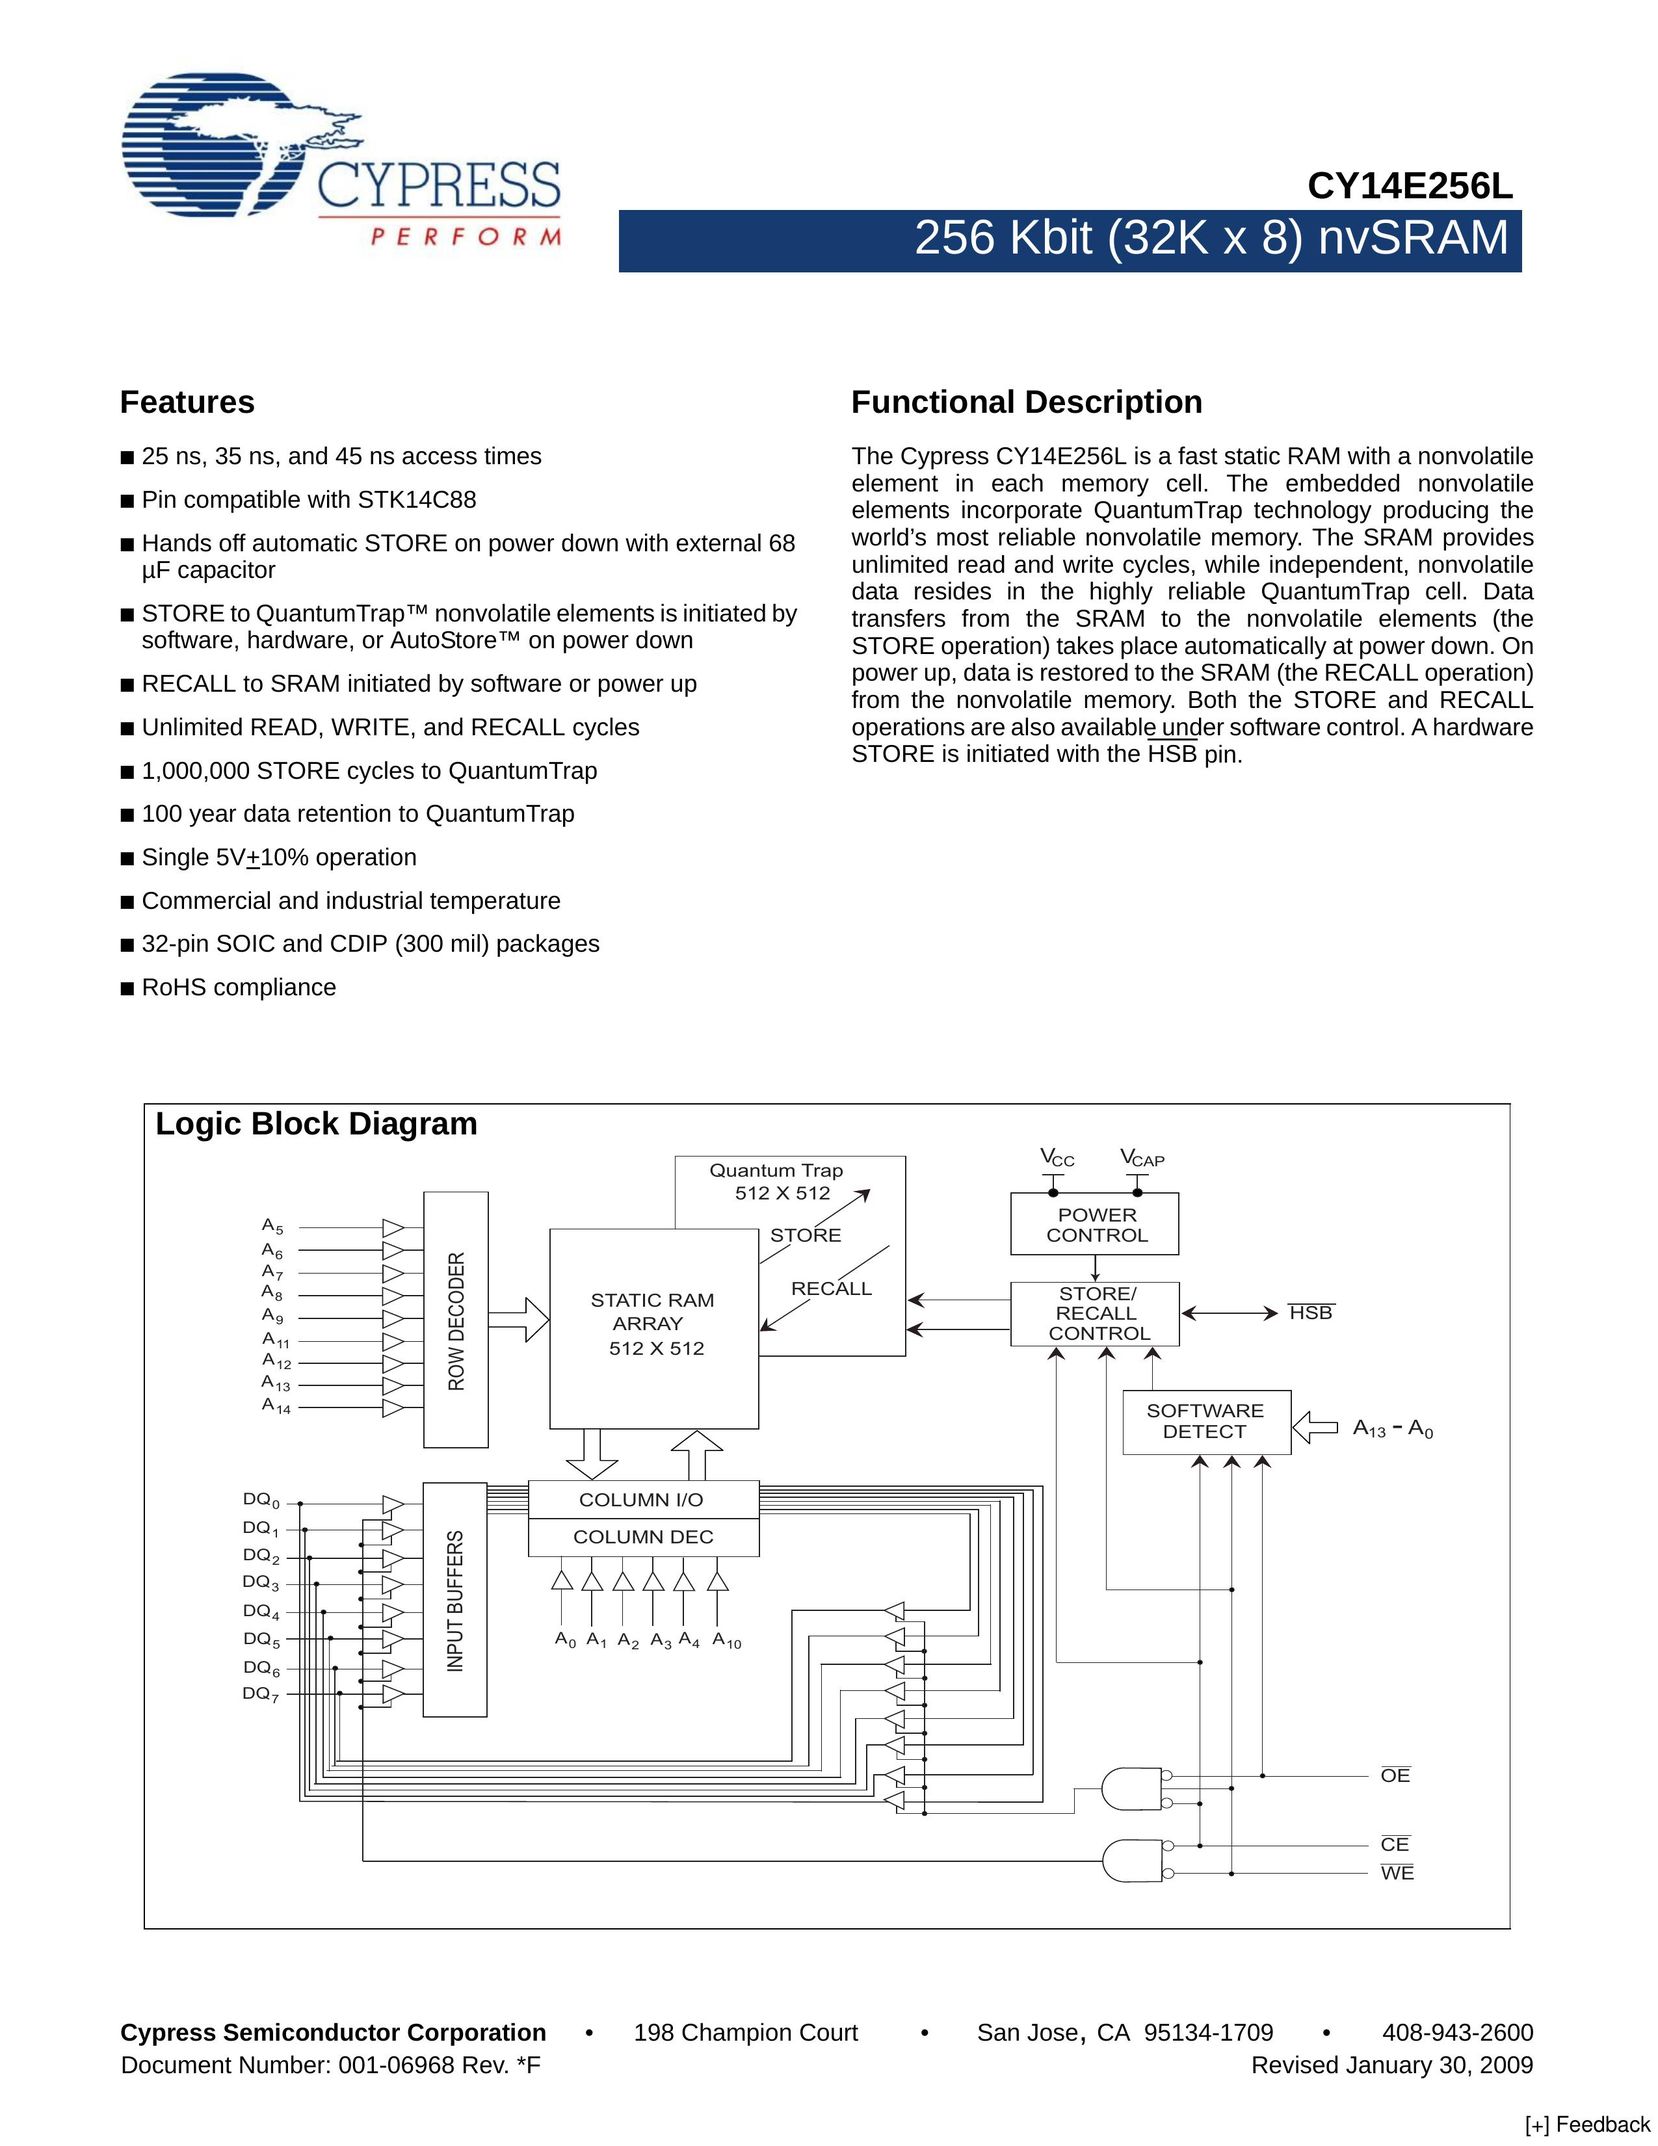 Cypress CY14E256L Computer Hardware User Manual